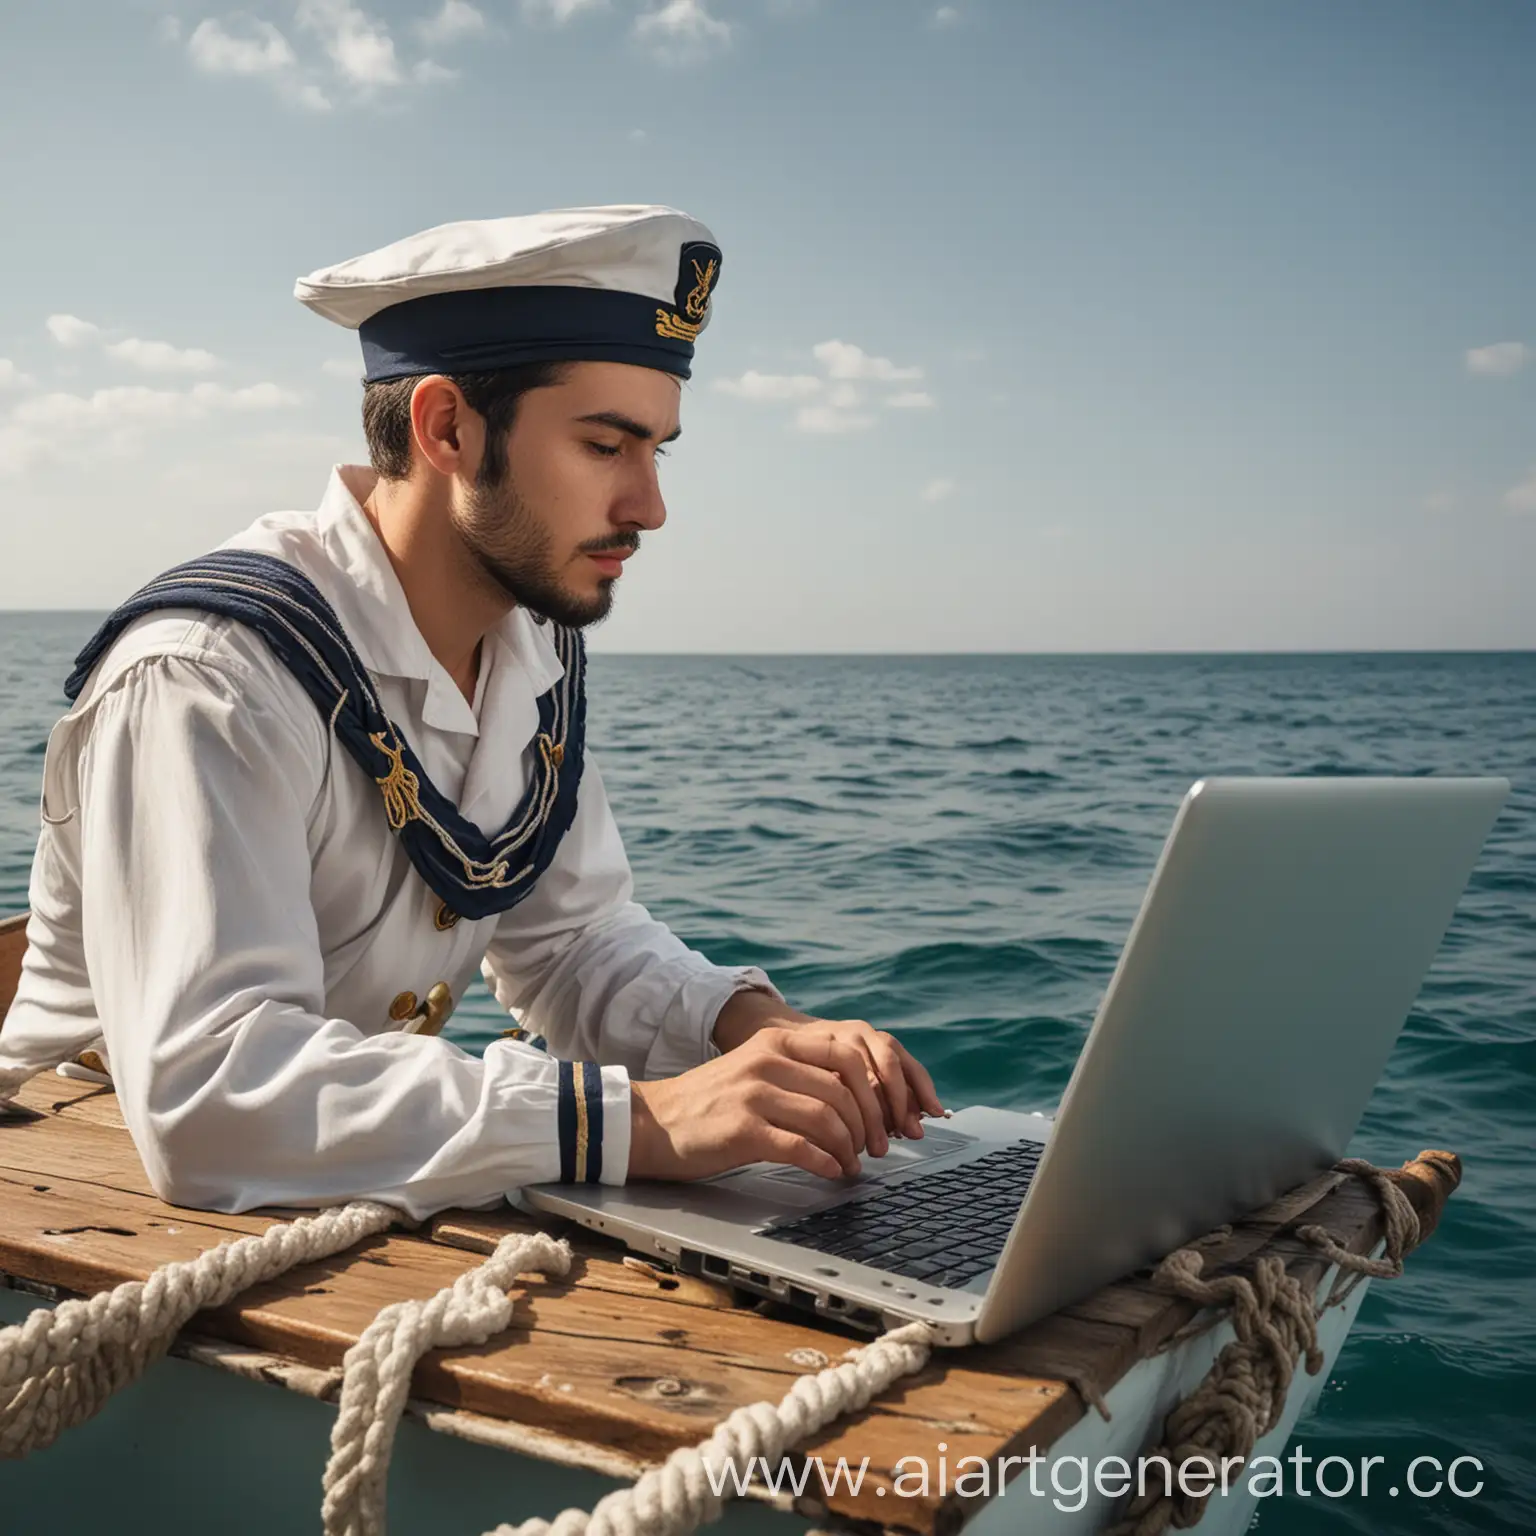 Sailor-on-Boat-Enjoying-Laptop-Time-in-Tranquil-Ocean